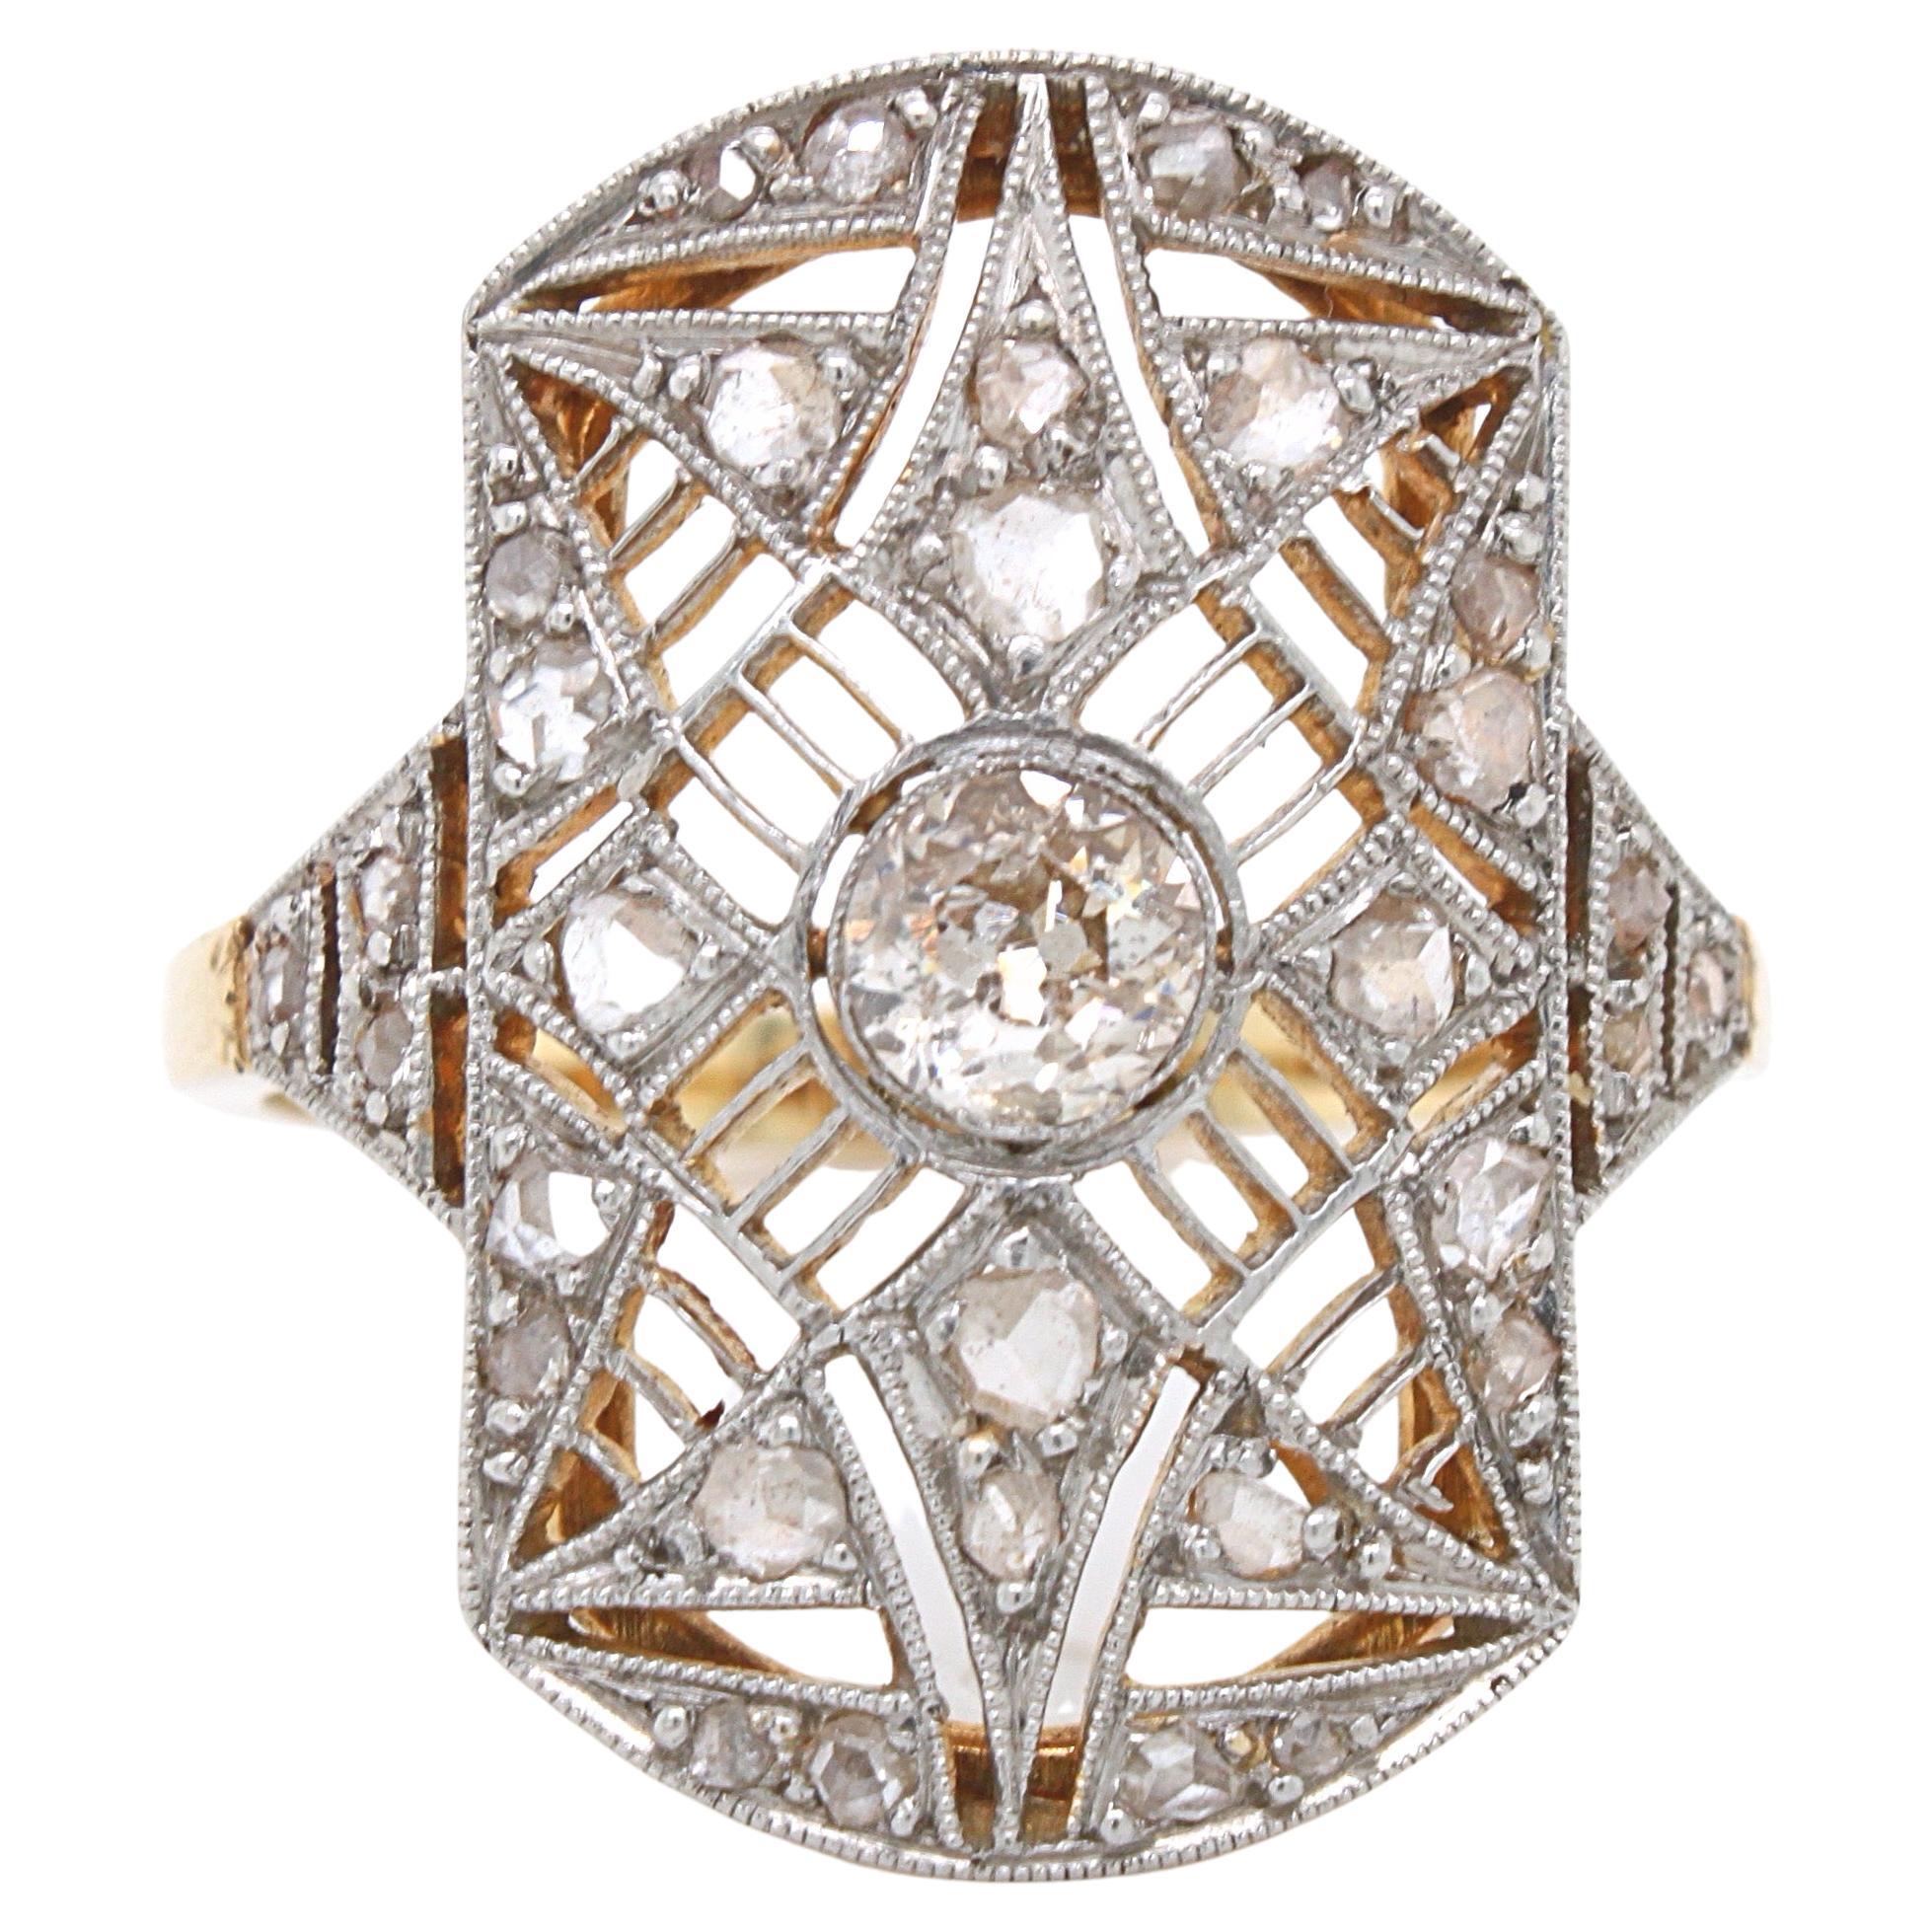 Old Cut and Rose Cut Diamond Star Emblem Ring, ca. 1890er Jahre